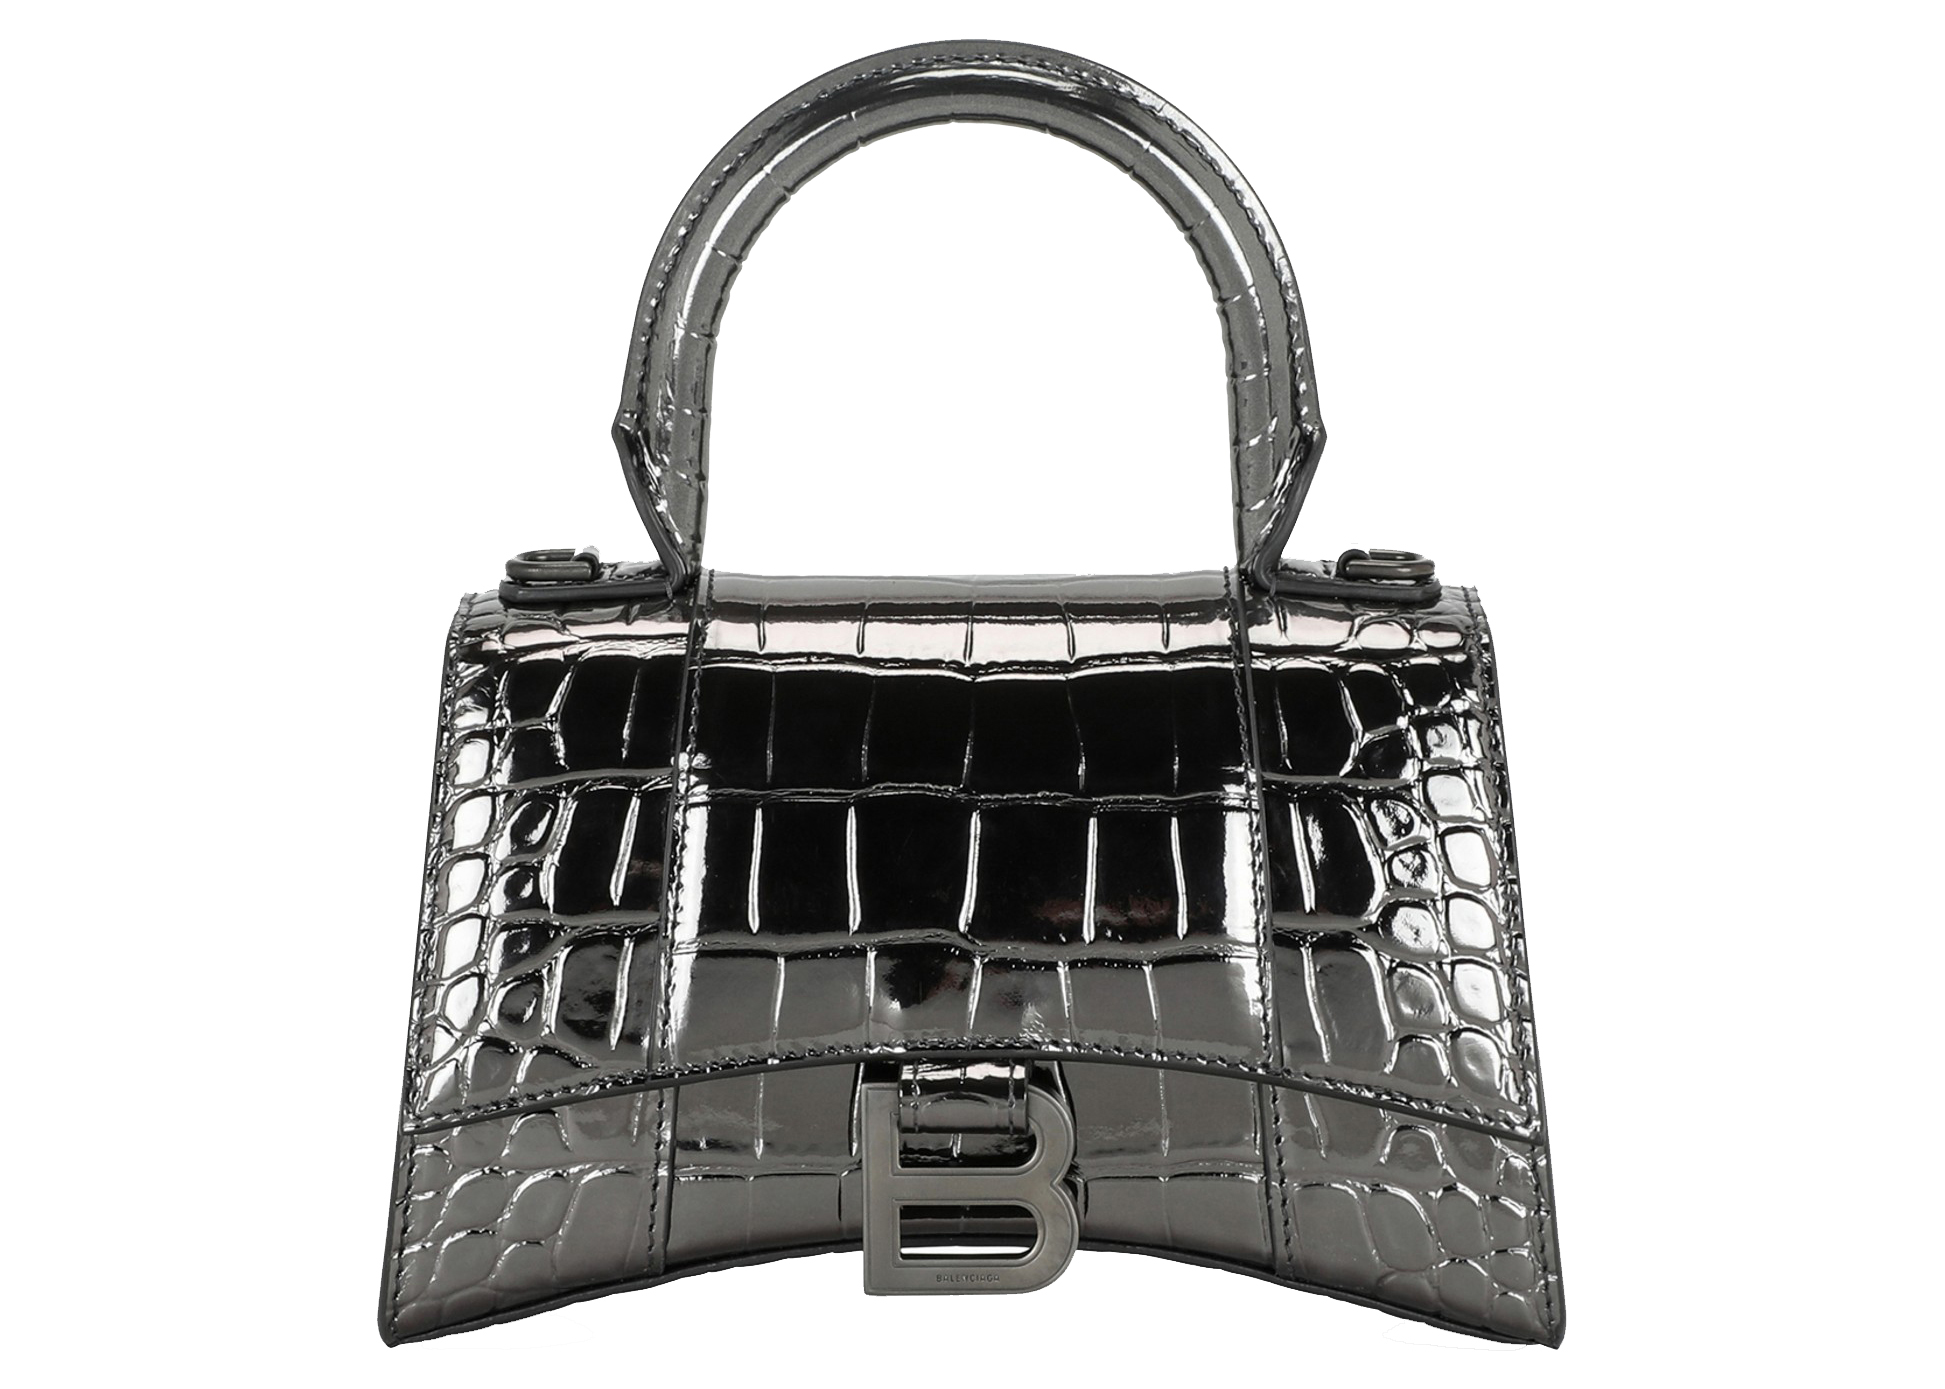 Balenciaga Silver Mini Glitter Hourglass Bag for Women